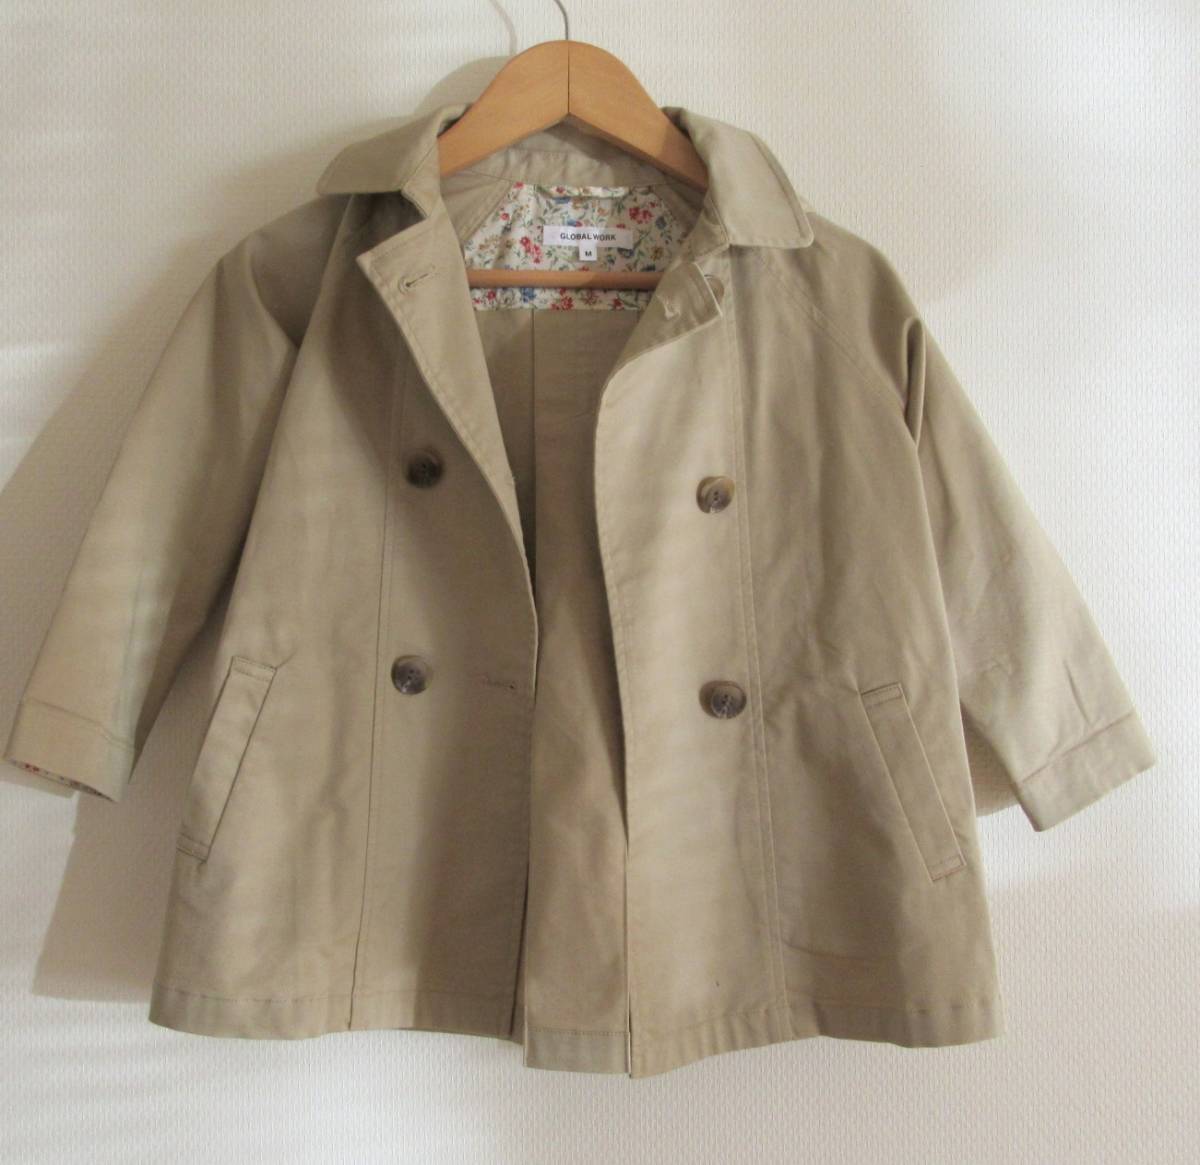 * GLOBAL WORK Kids trench coat 100-110 size jacket 